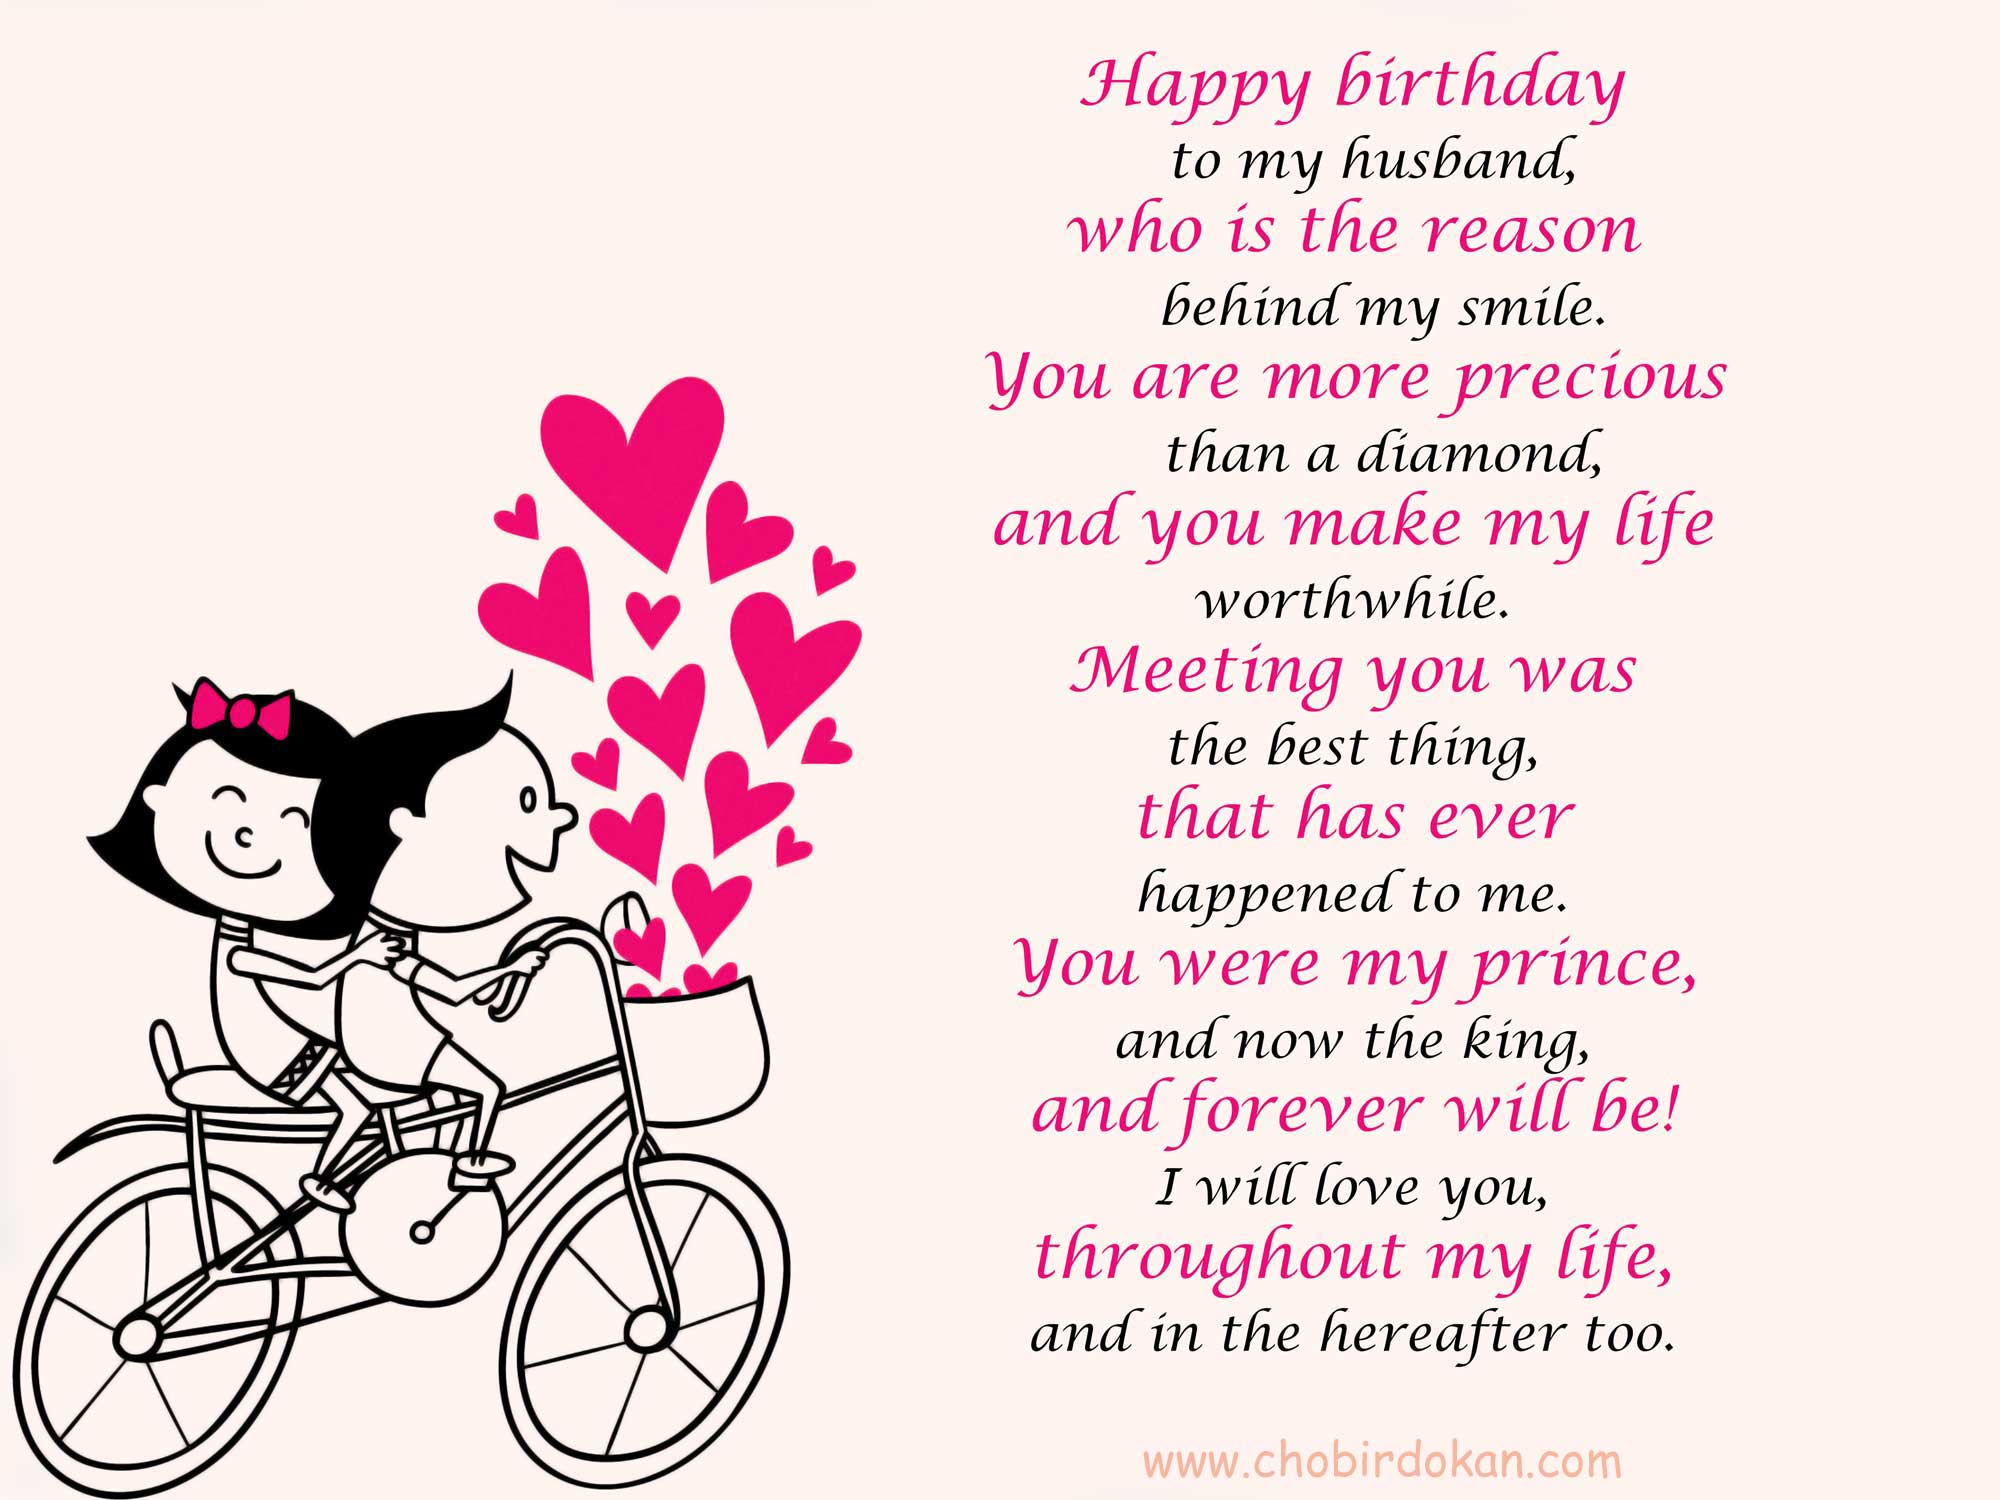 Happy birthday husband poems jpeg